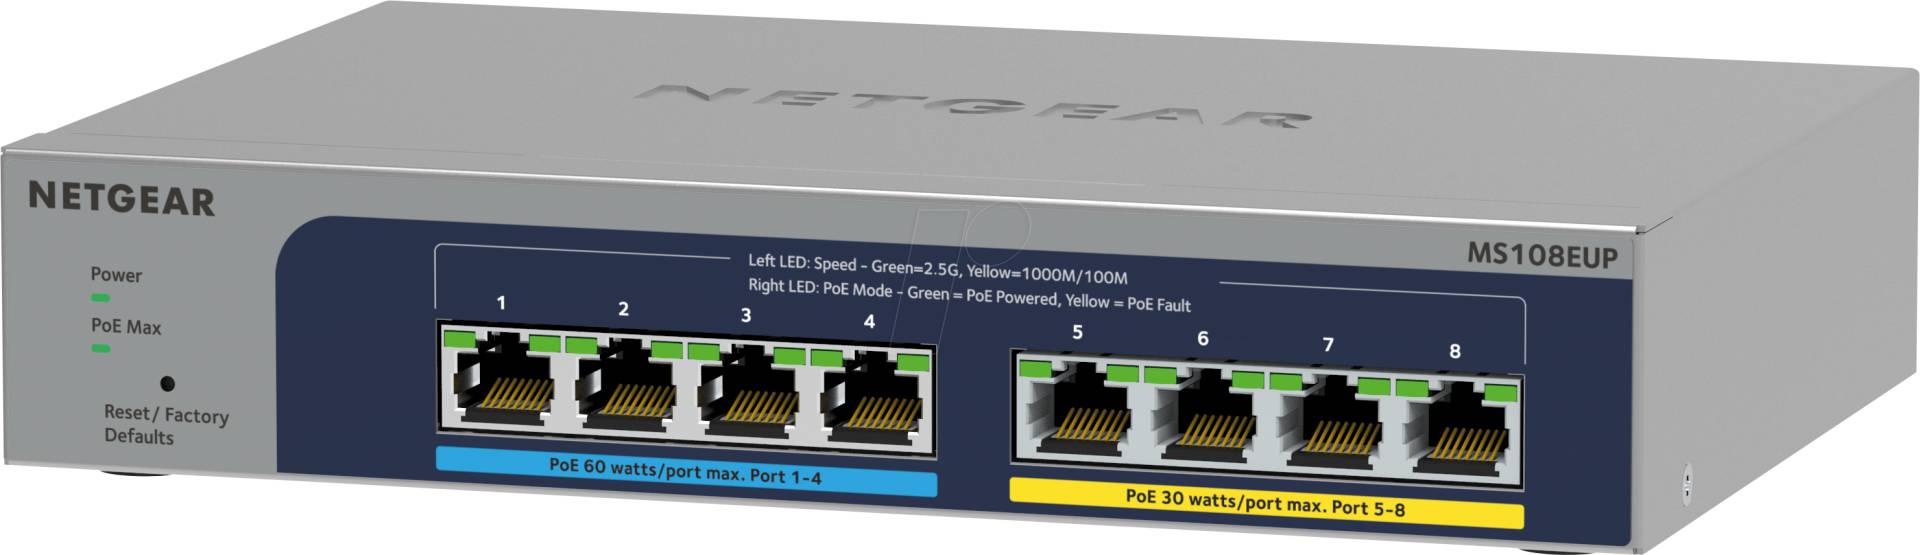 NETGEAR MS108EUP - Switch, 8-Port, 2,5 Gigabit Ethernet, PoE++ von Netgear